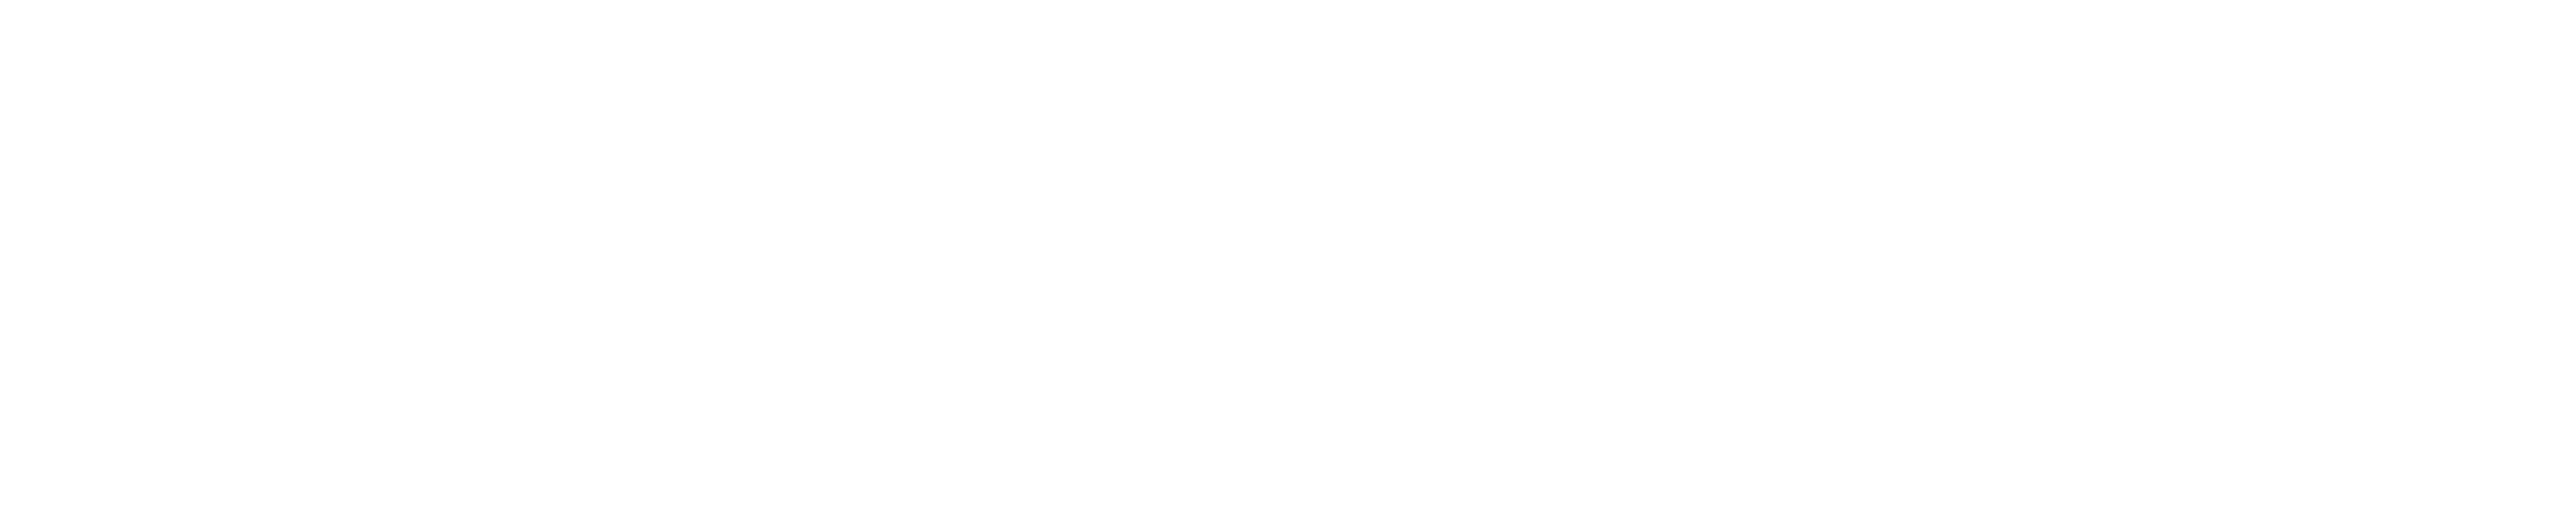 Carlisle Logo - About Us Spray Foam Insulation